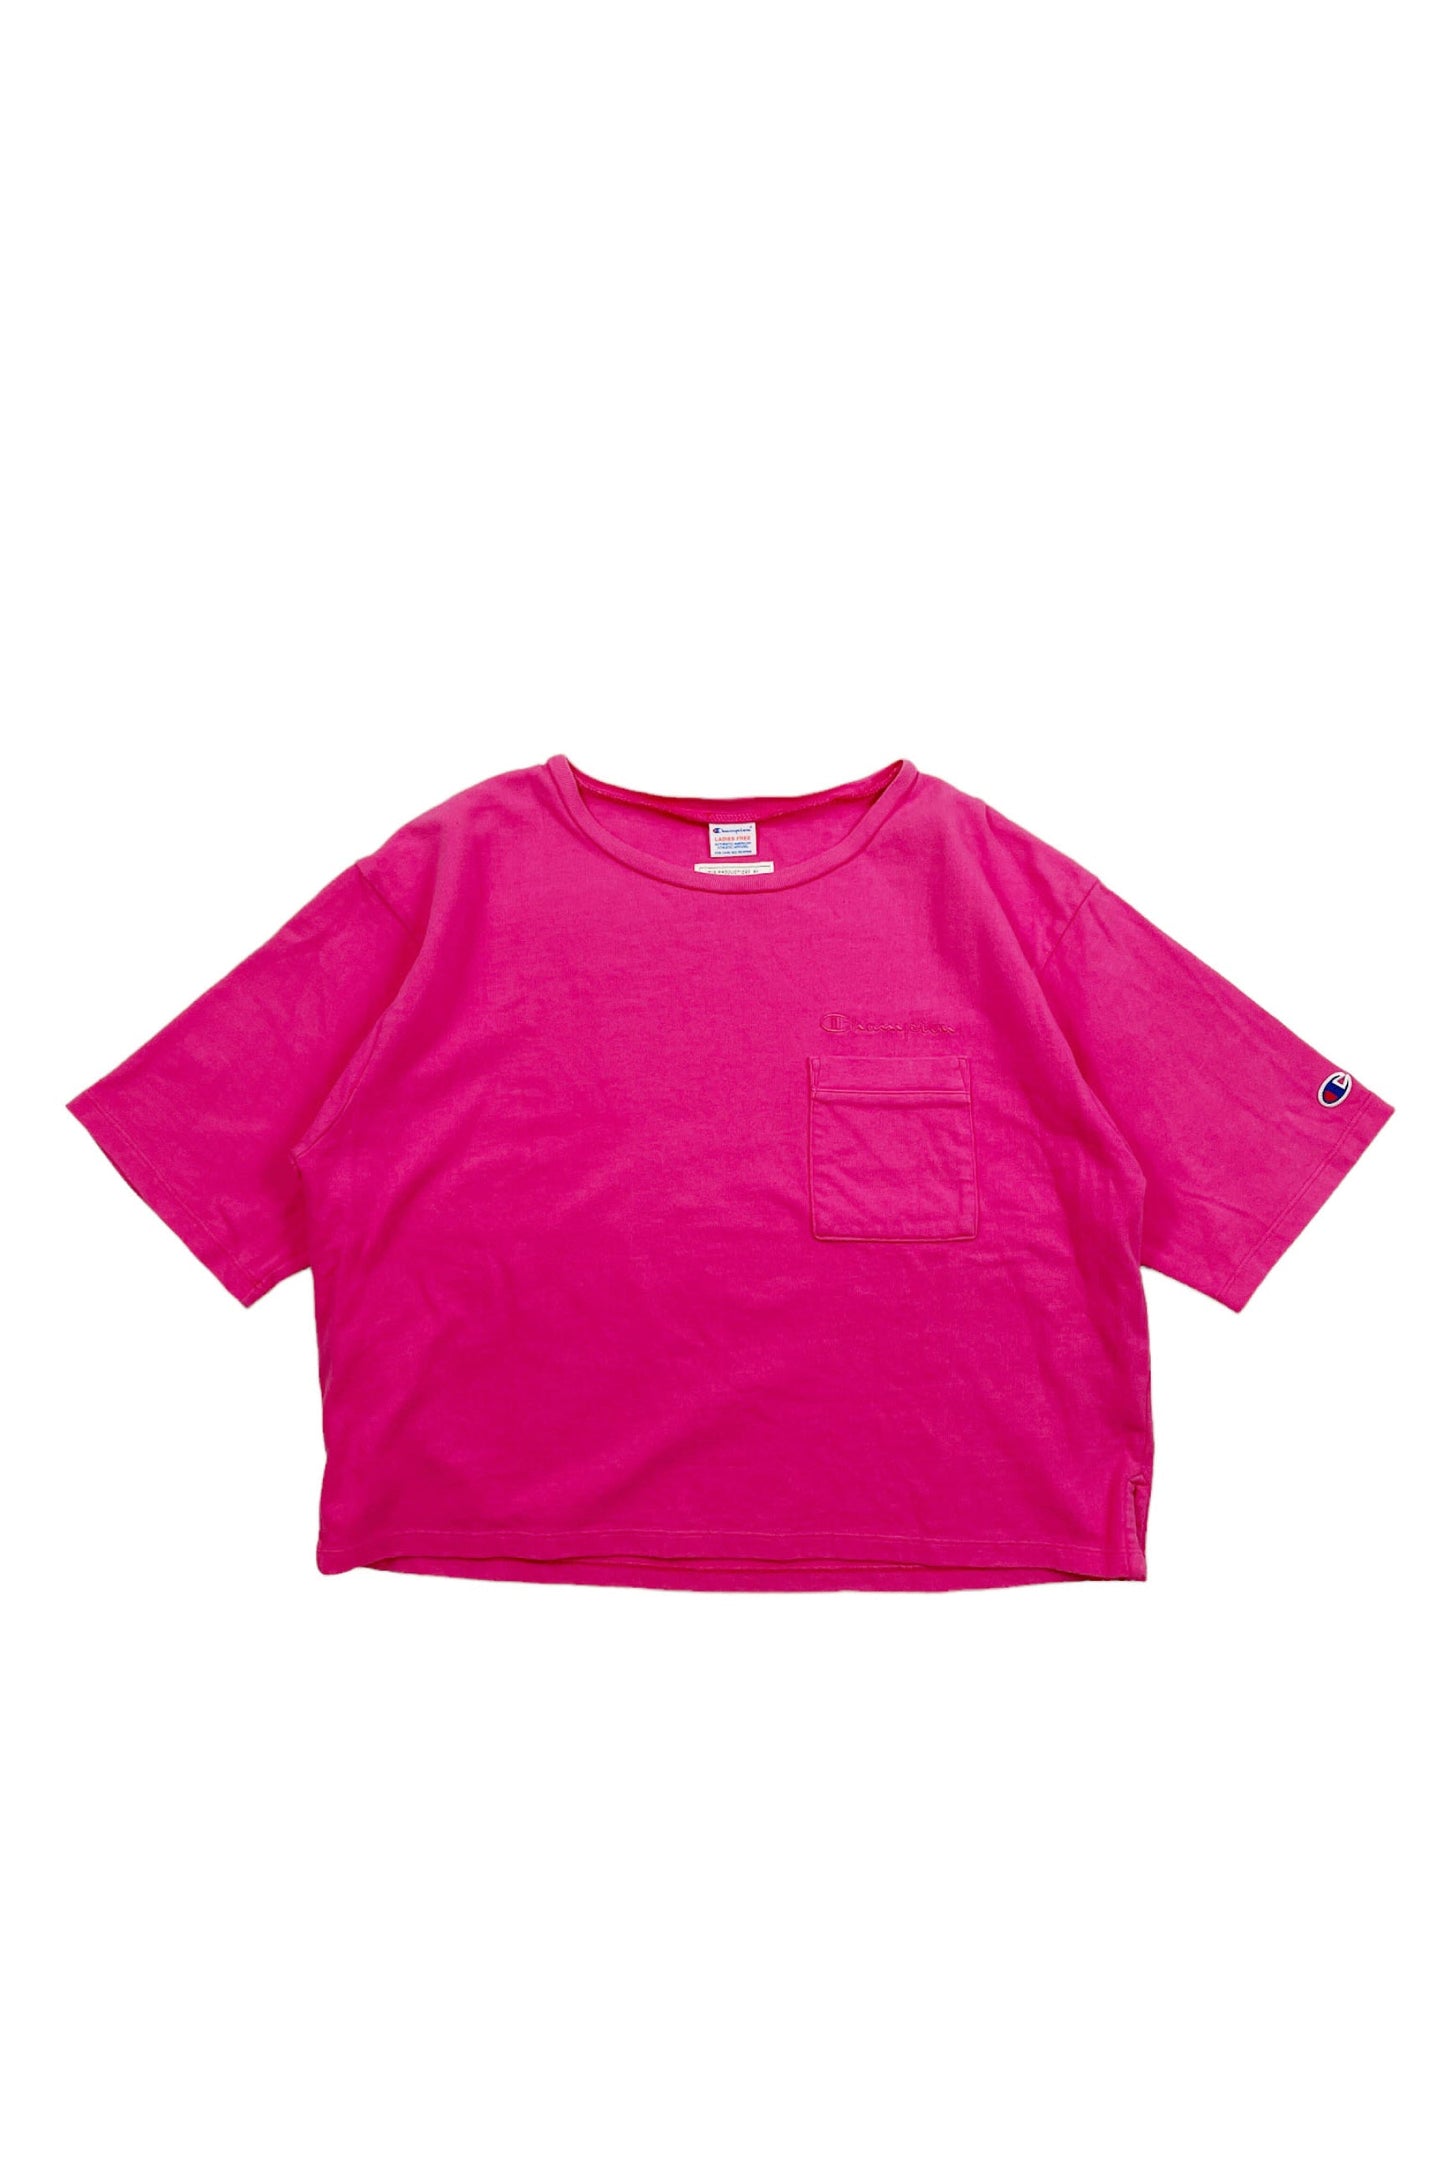 Champion T-shirt pink